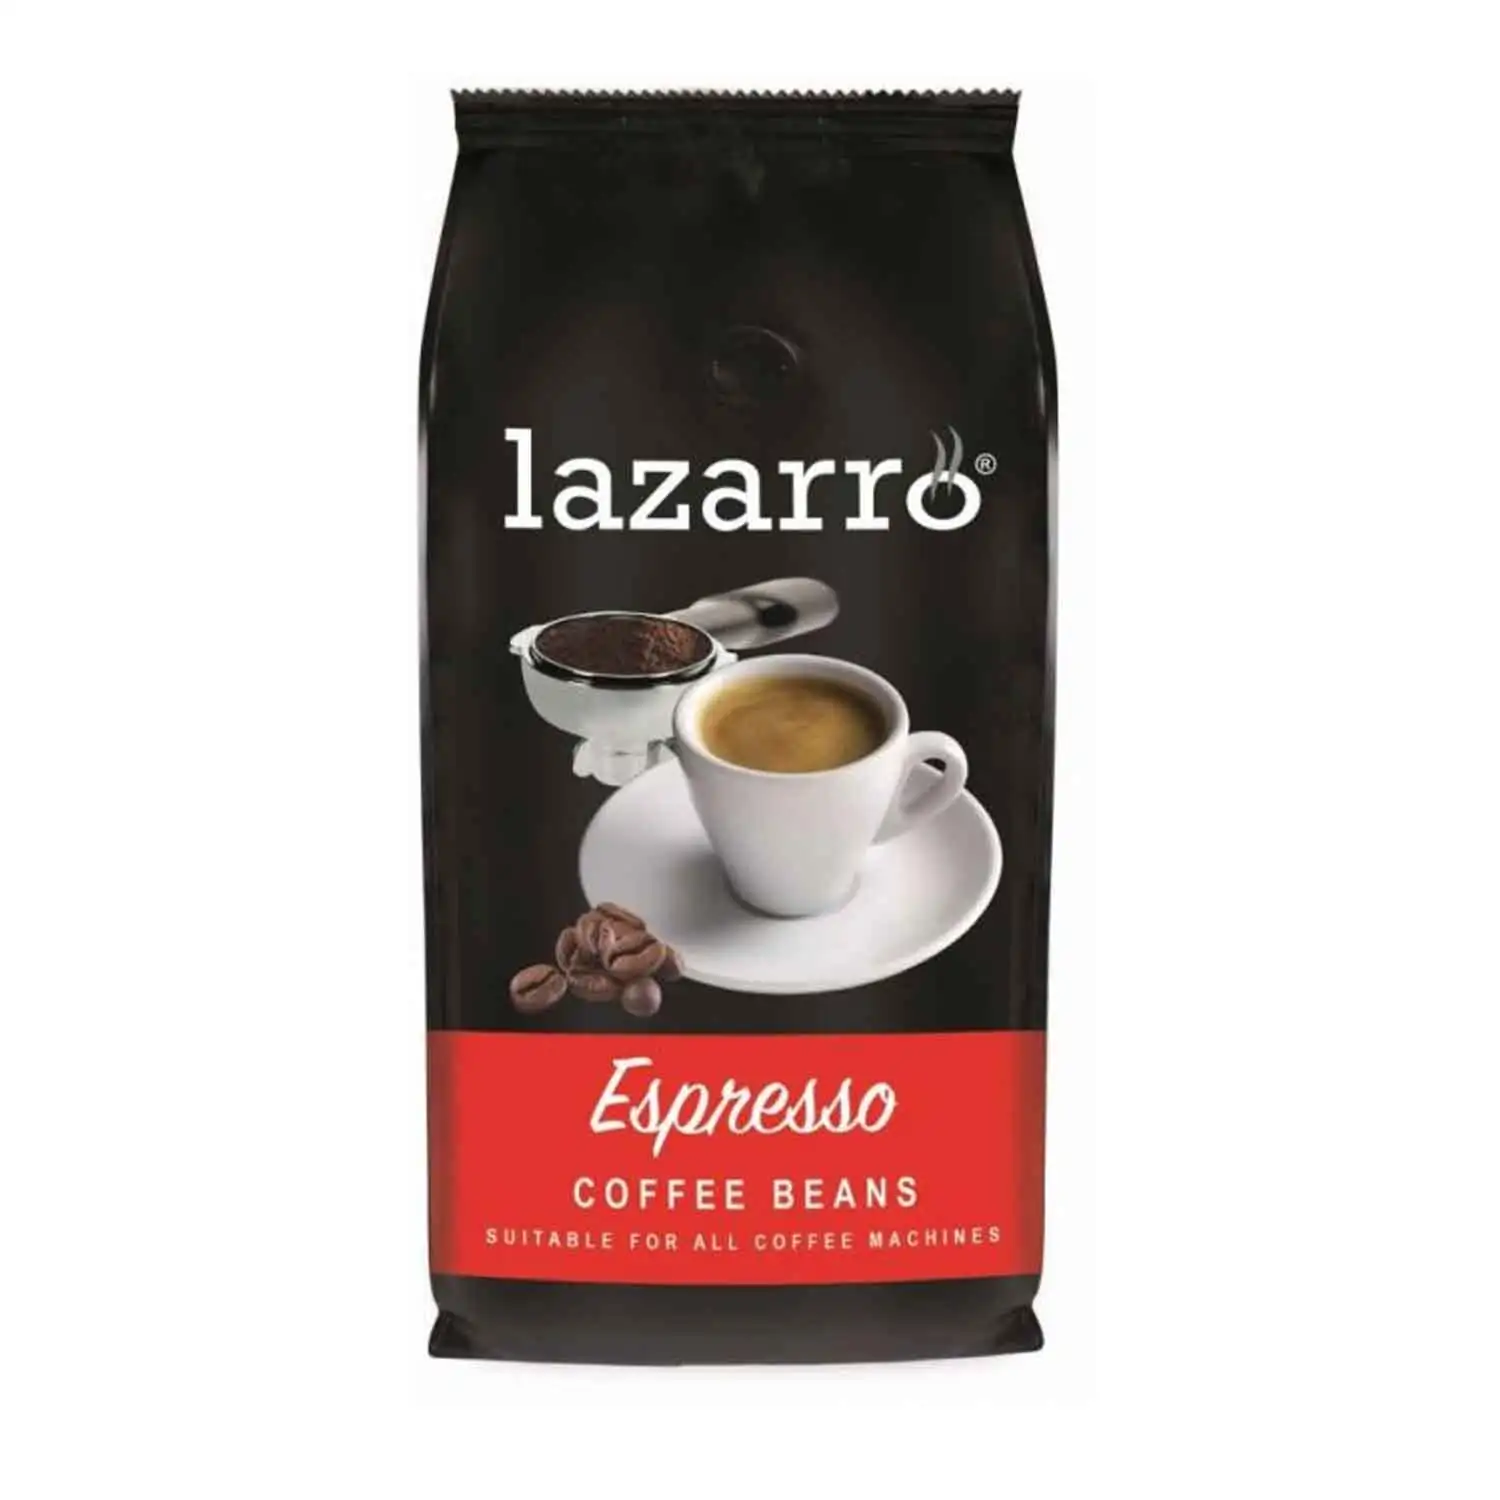 Lazarro coffee beans espresso 1kg - Buy at Real Tobacco